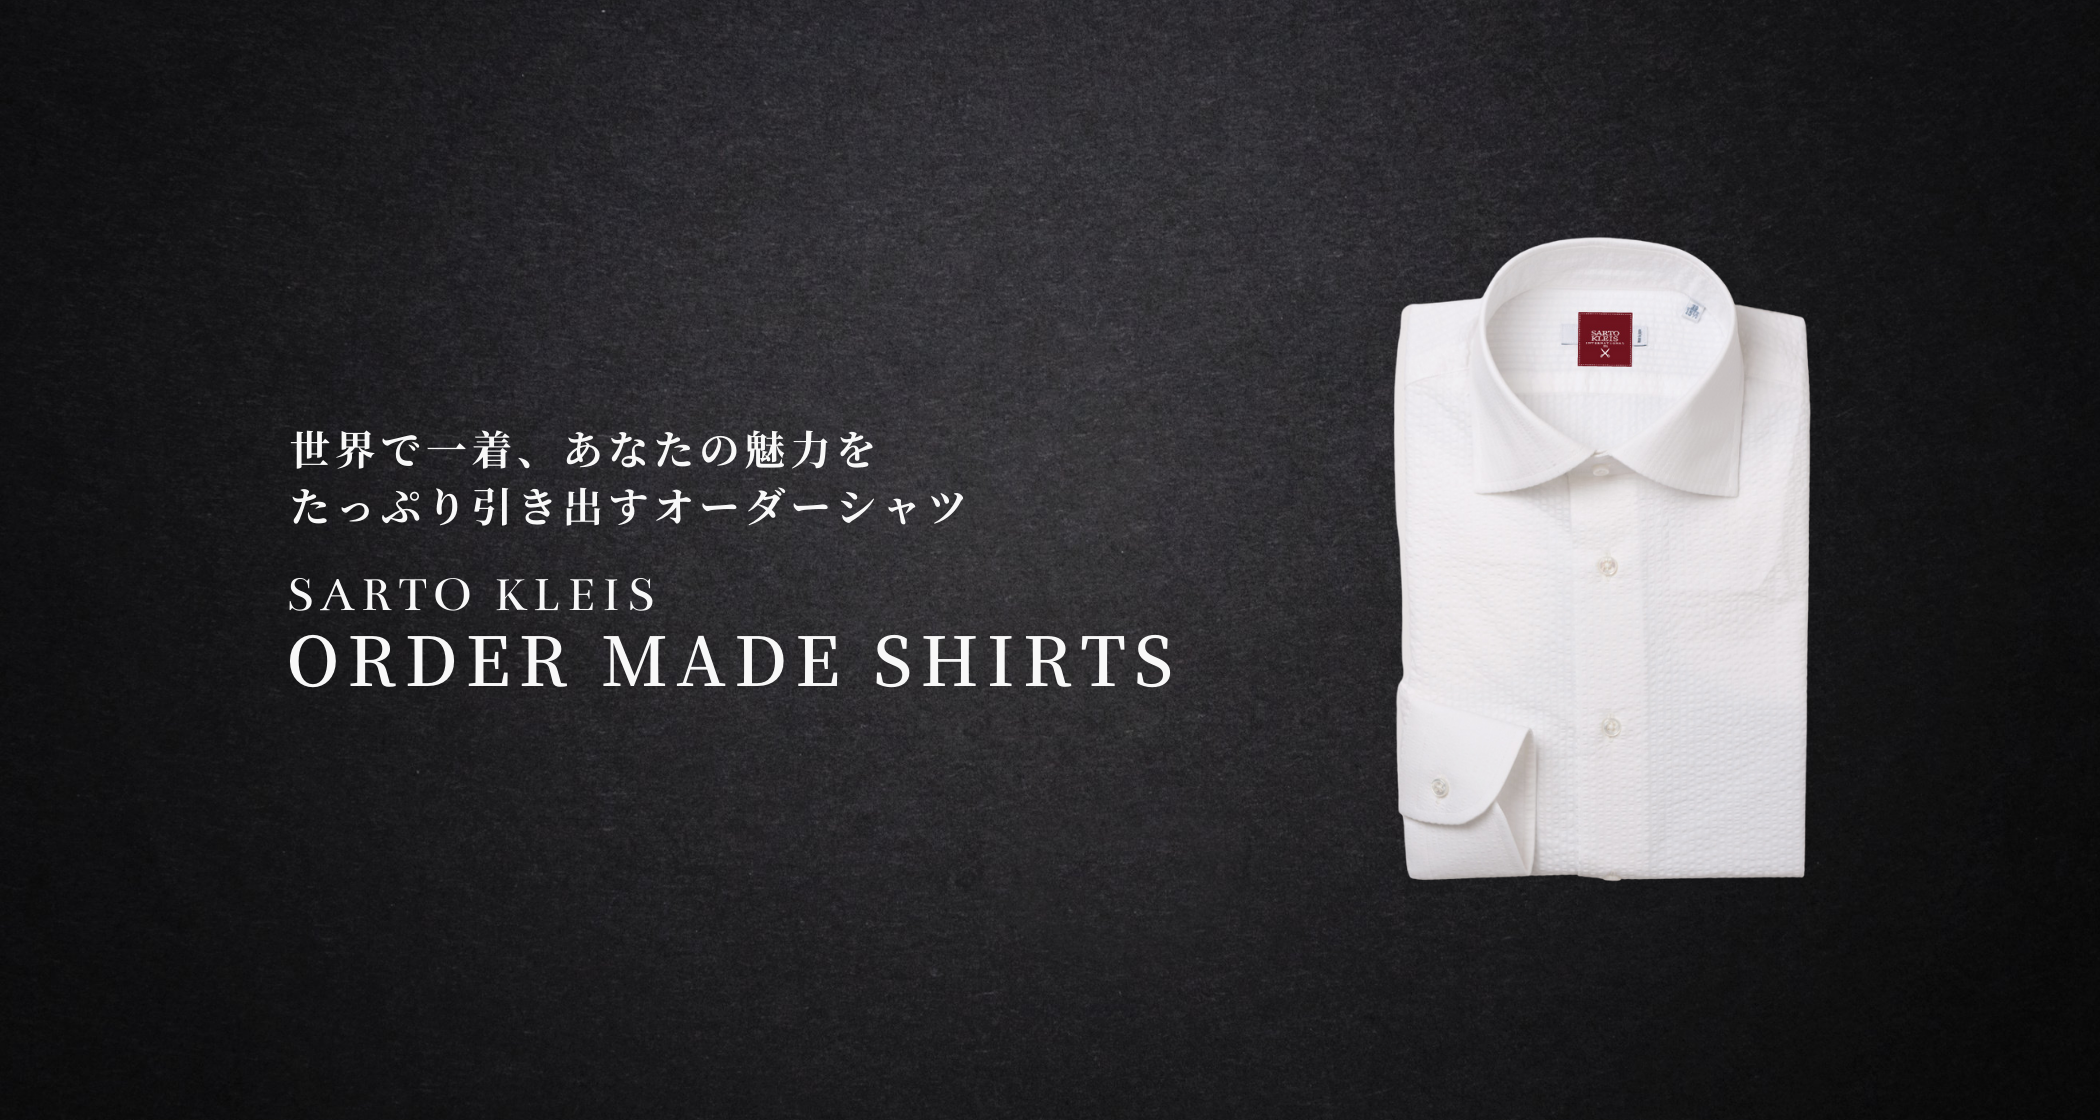 order shirts 1 - オーダーシャツ